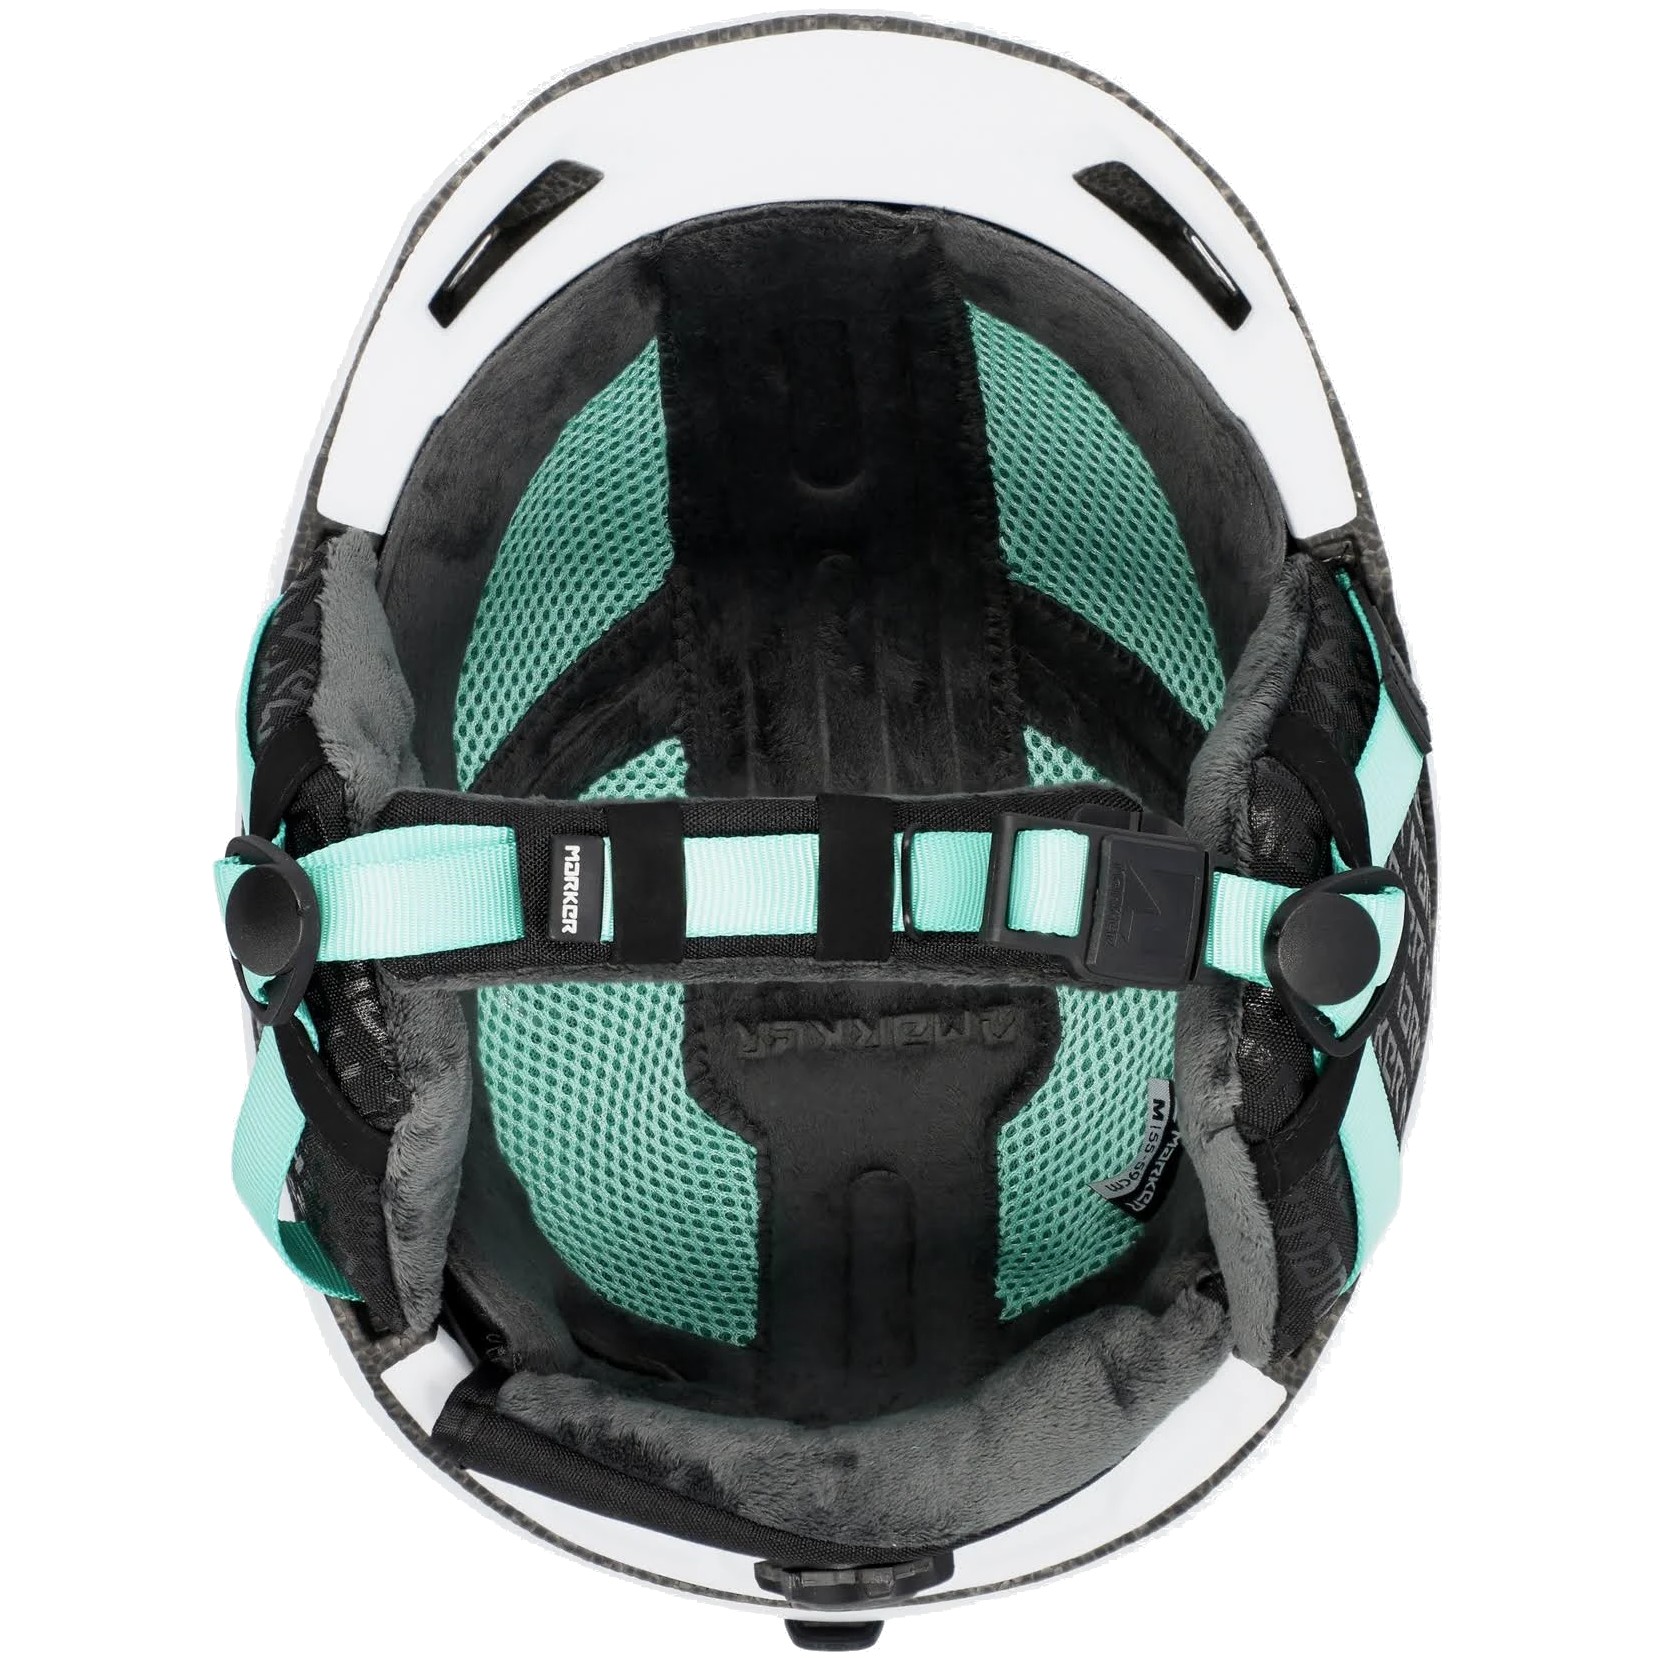 Marker Companion + Women's Ski/Snowboard Helmet